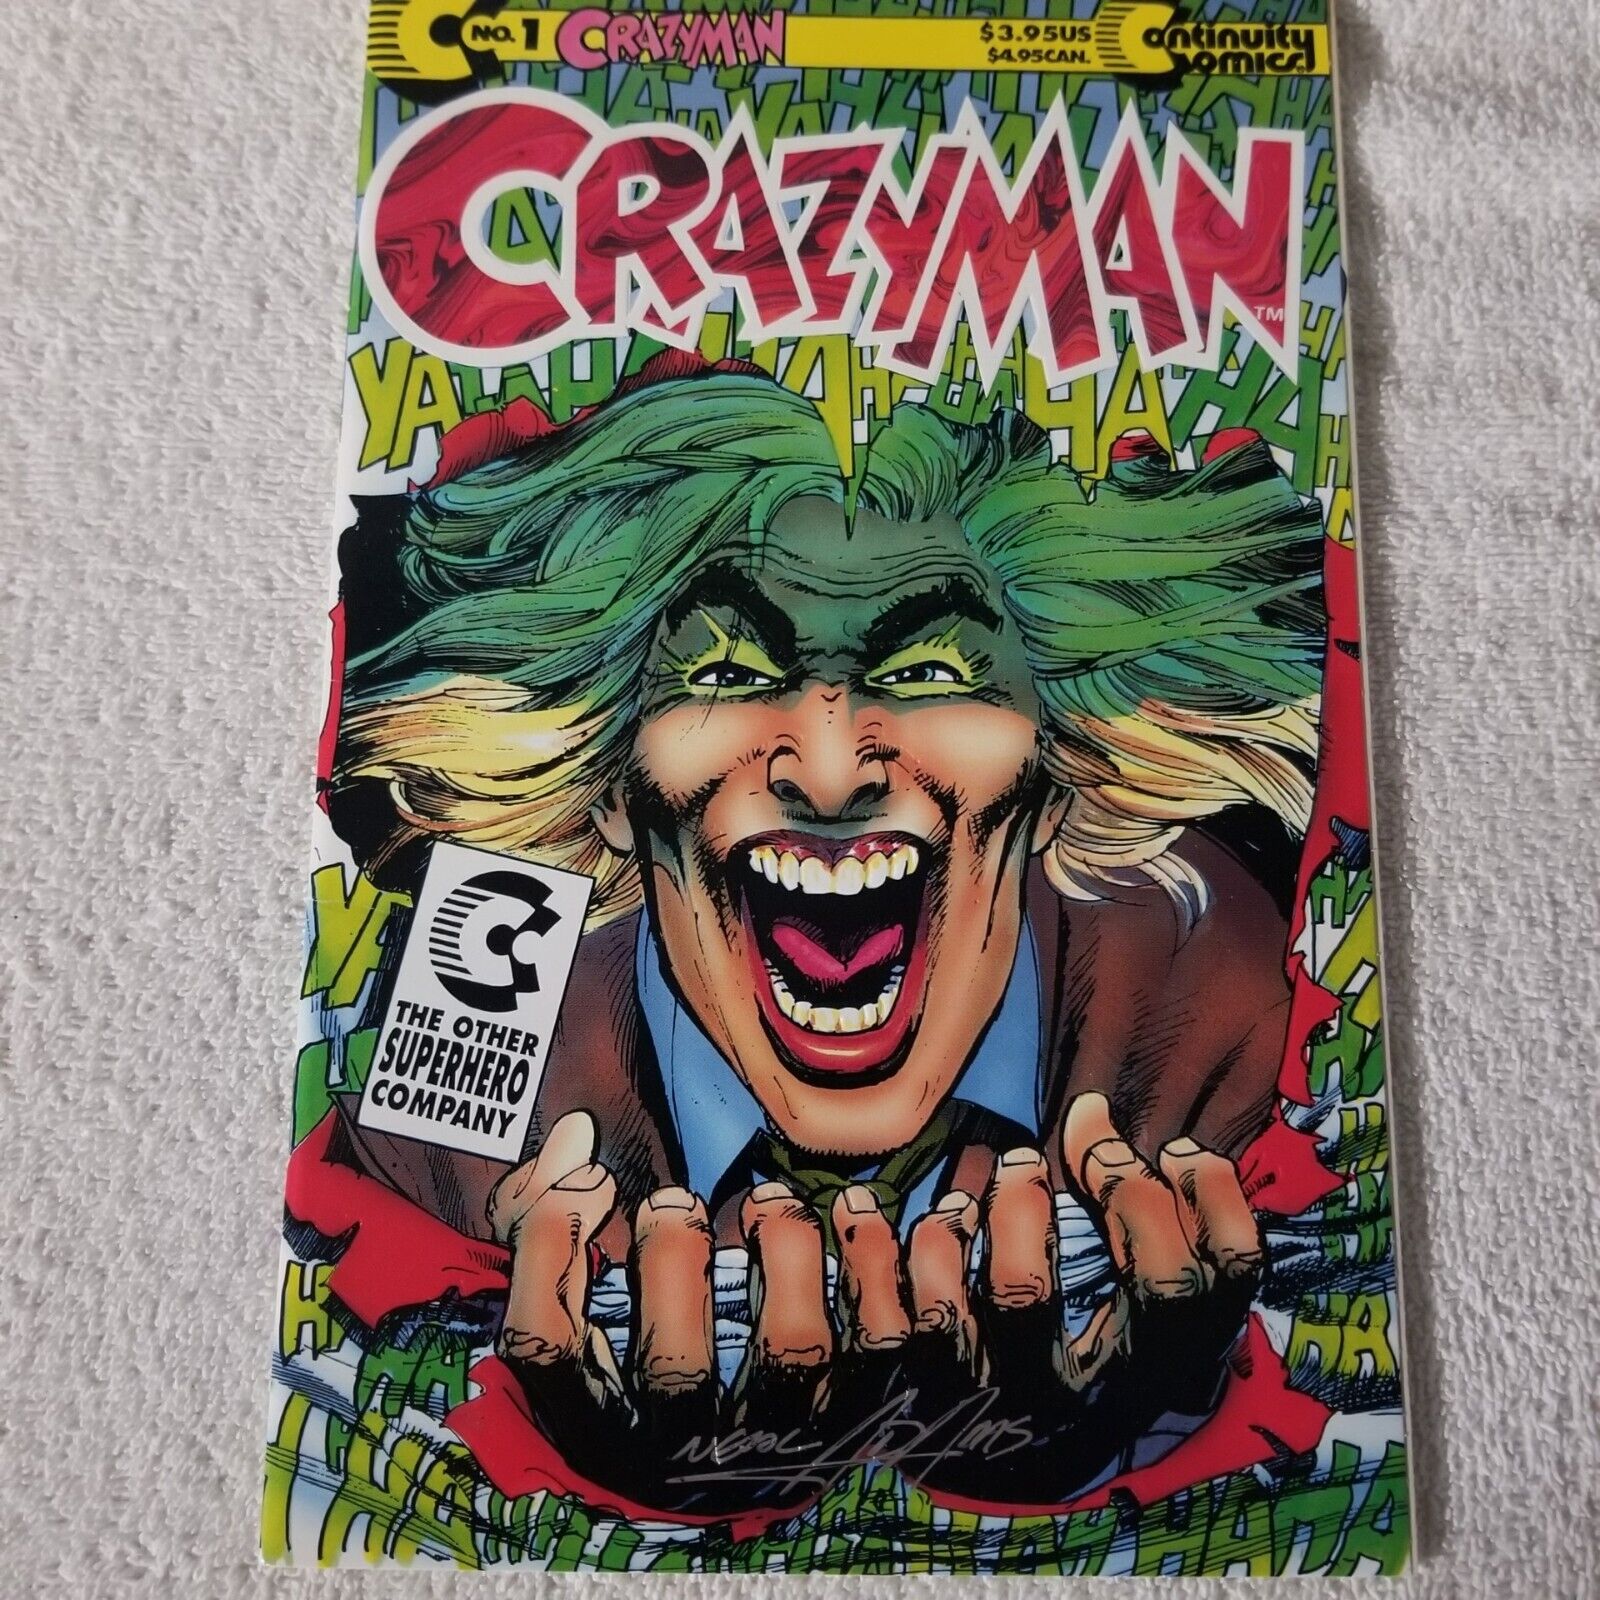 Crazyman Comic No 1 Signed By NEAL ADAMS, Batman Artist - 1991